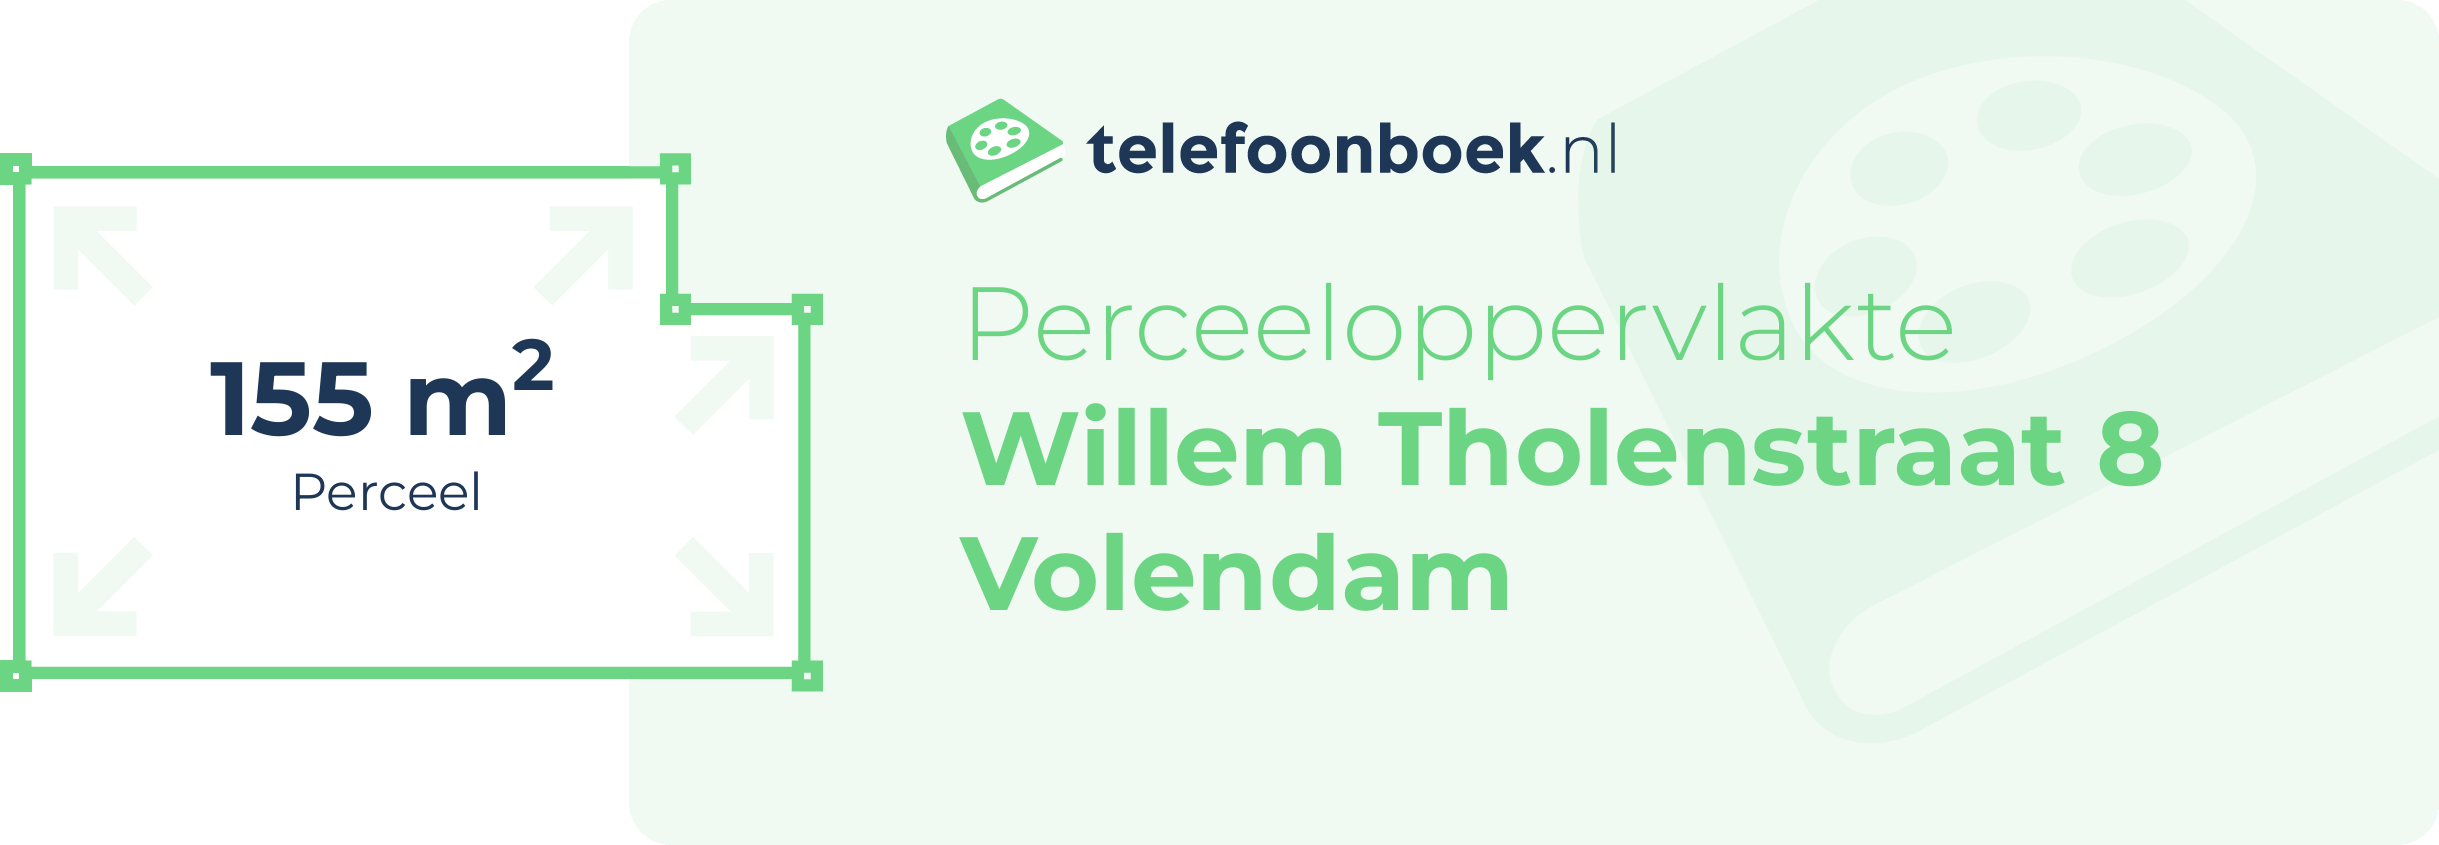 Perceeloppervlakte Willem Tholenstraat 8 Volendam